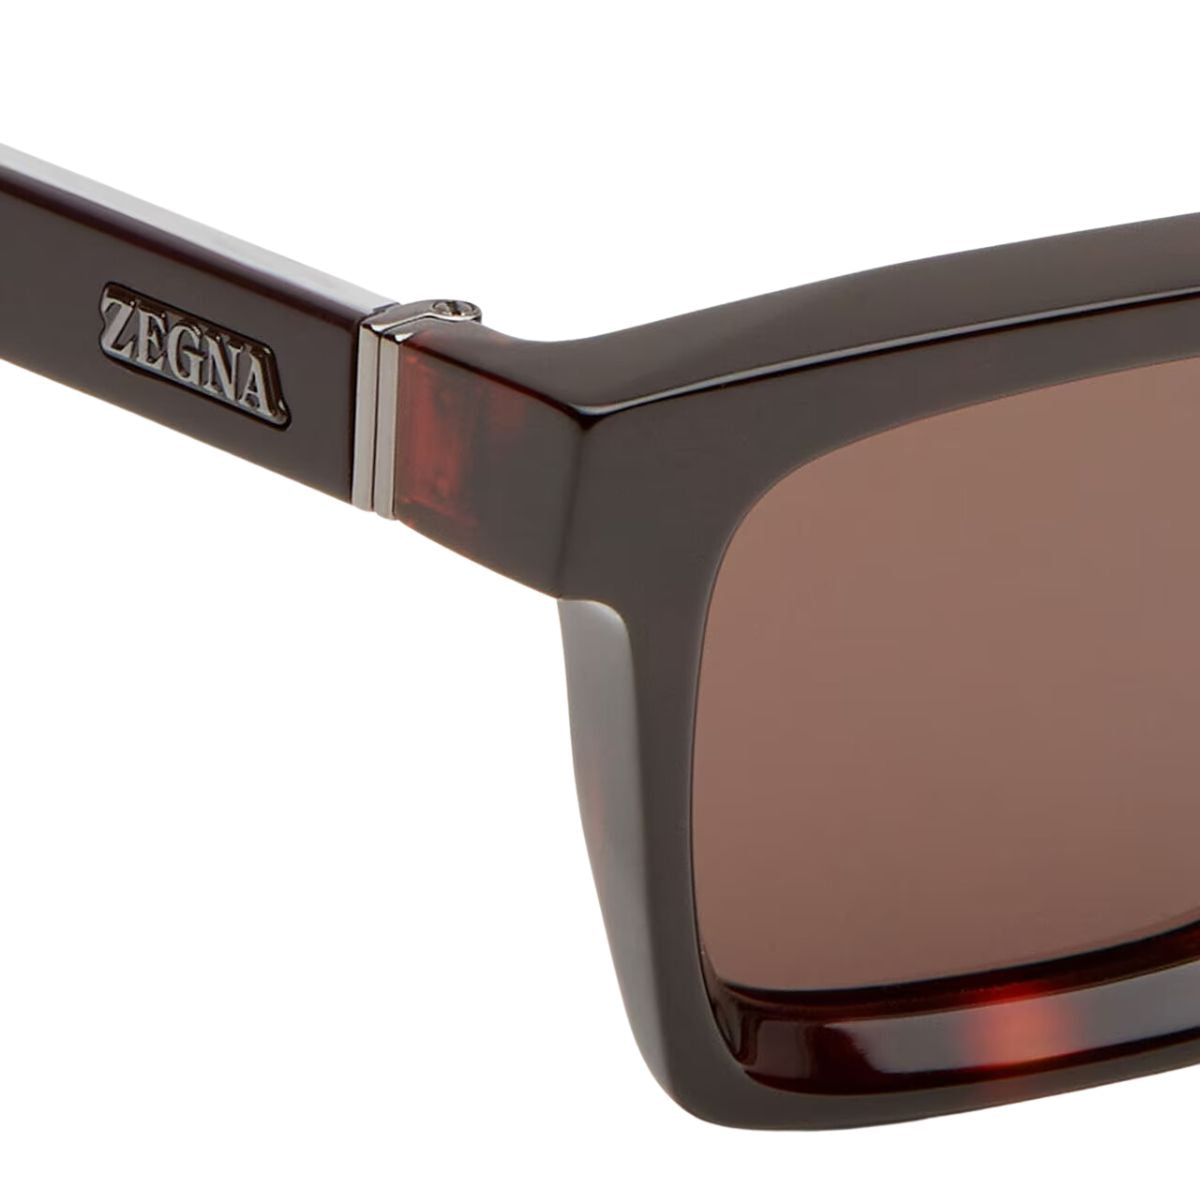 Buy Online ERMENEGILDO ZEGNA  EZ0214 56E Sunglasses For Mens At Optorium